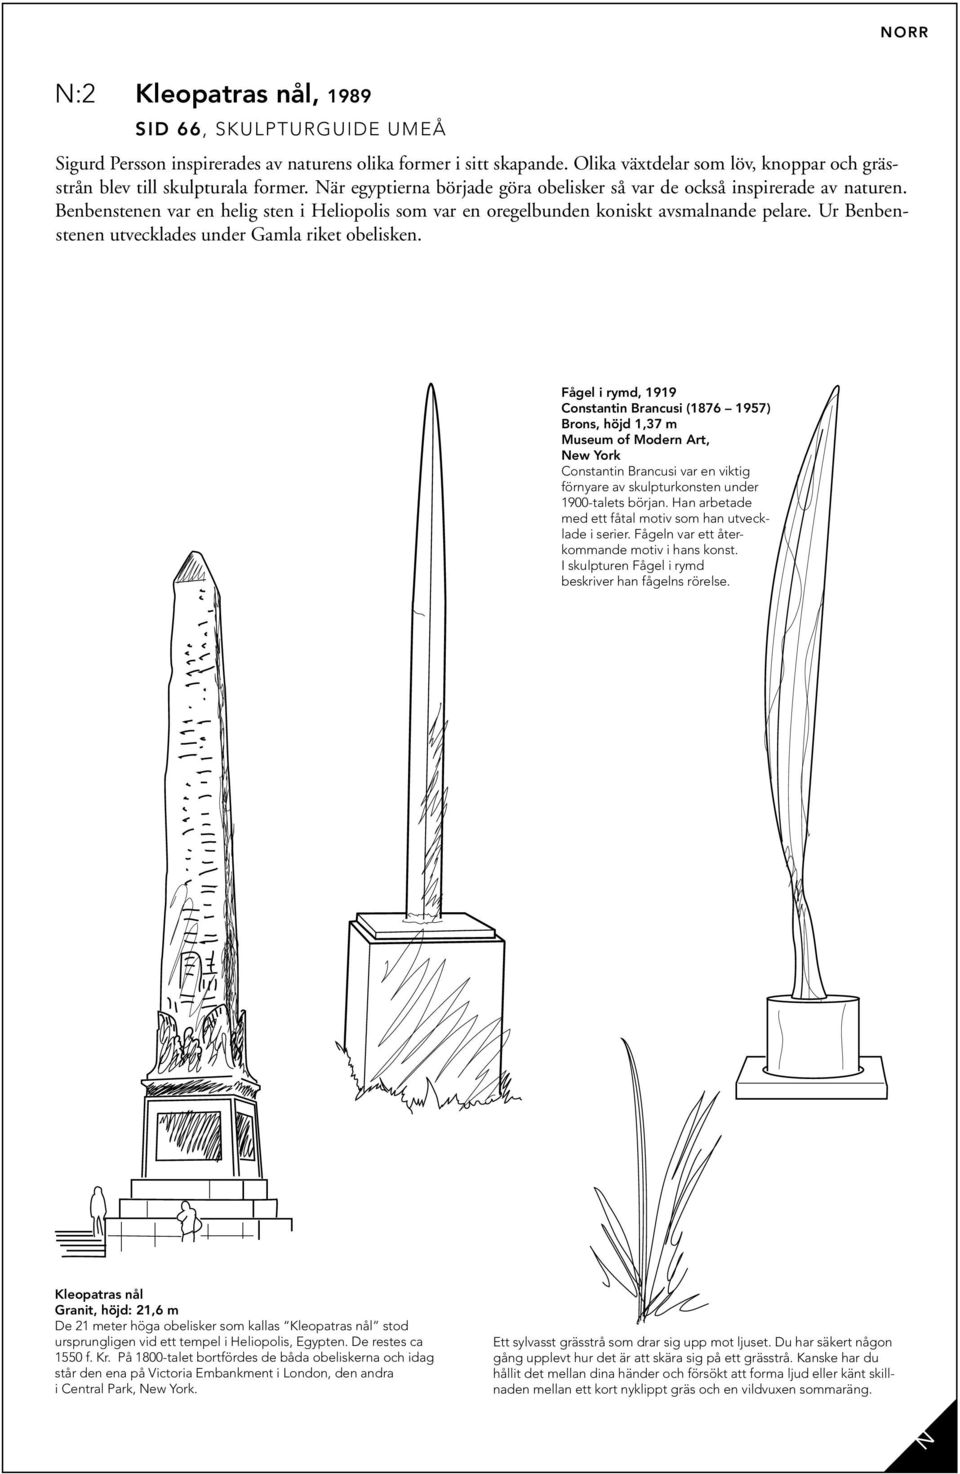 Benbenstenen var en helig sten i Heliopolis som var en oregelbunden koniskt avsmalnande pelare. Ur Benbenstenen utvecklades under Gamla riket obelisken.